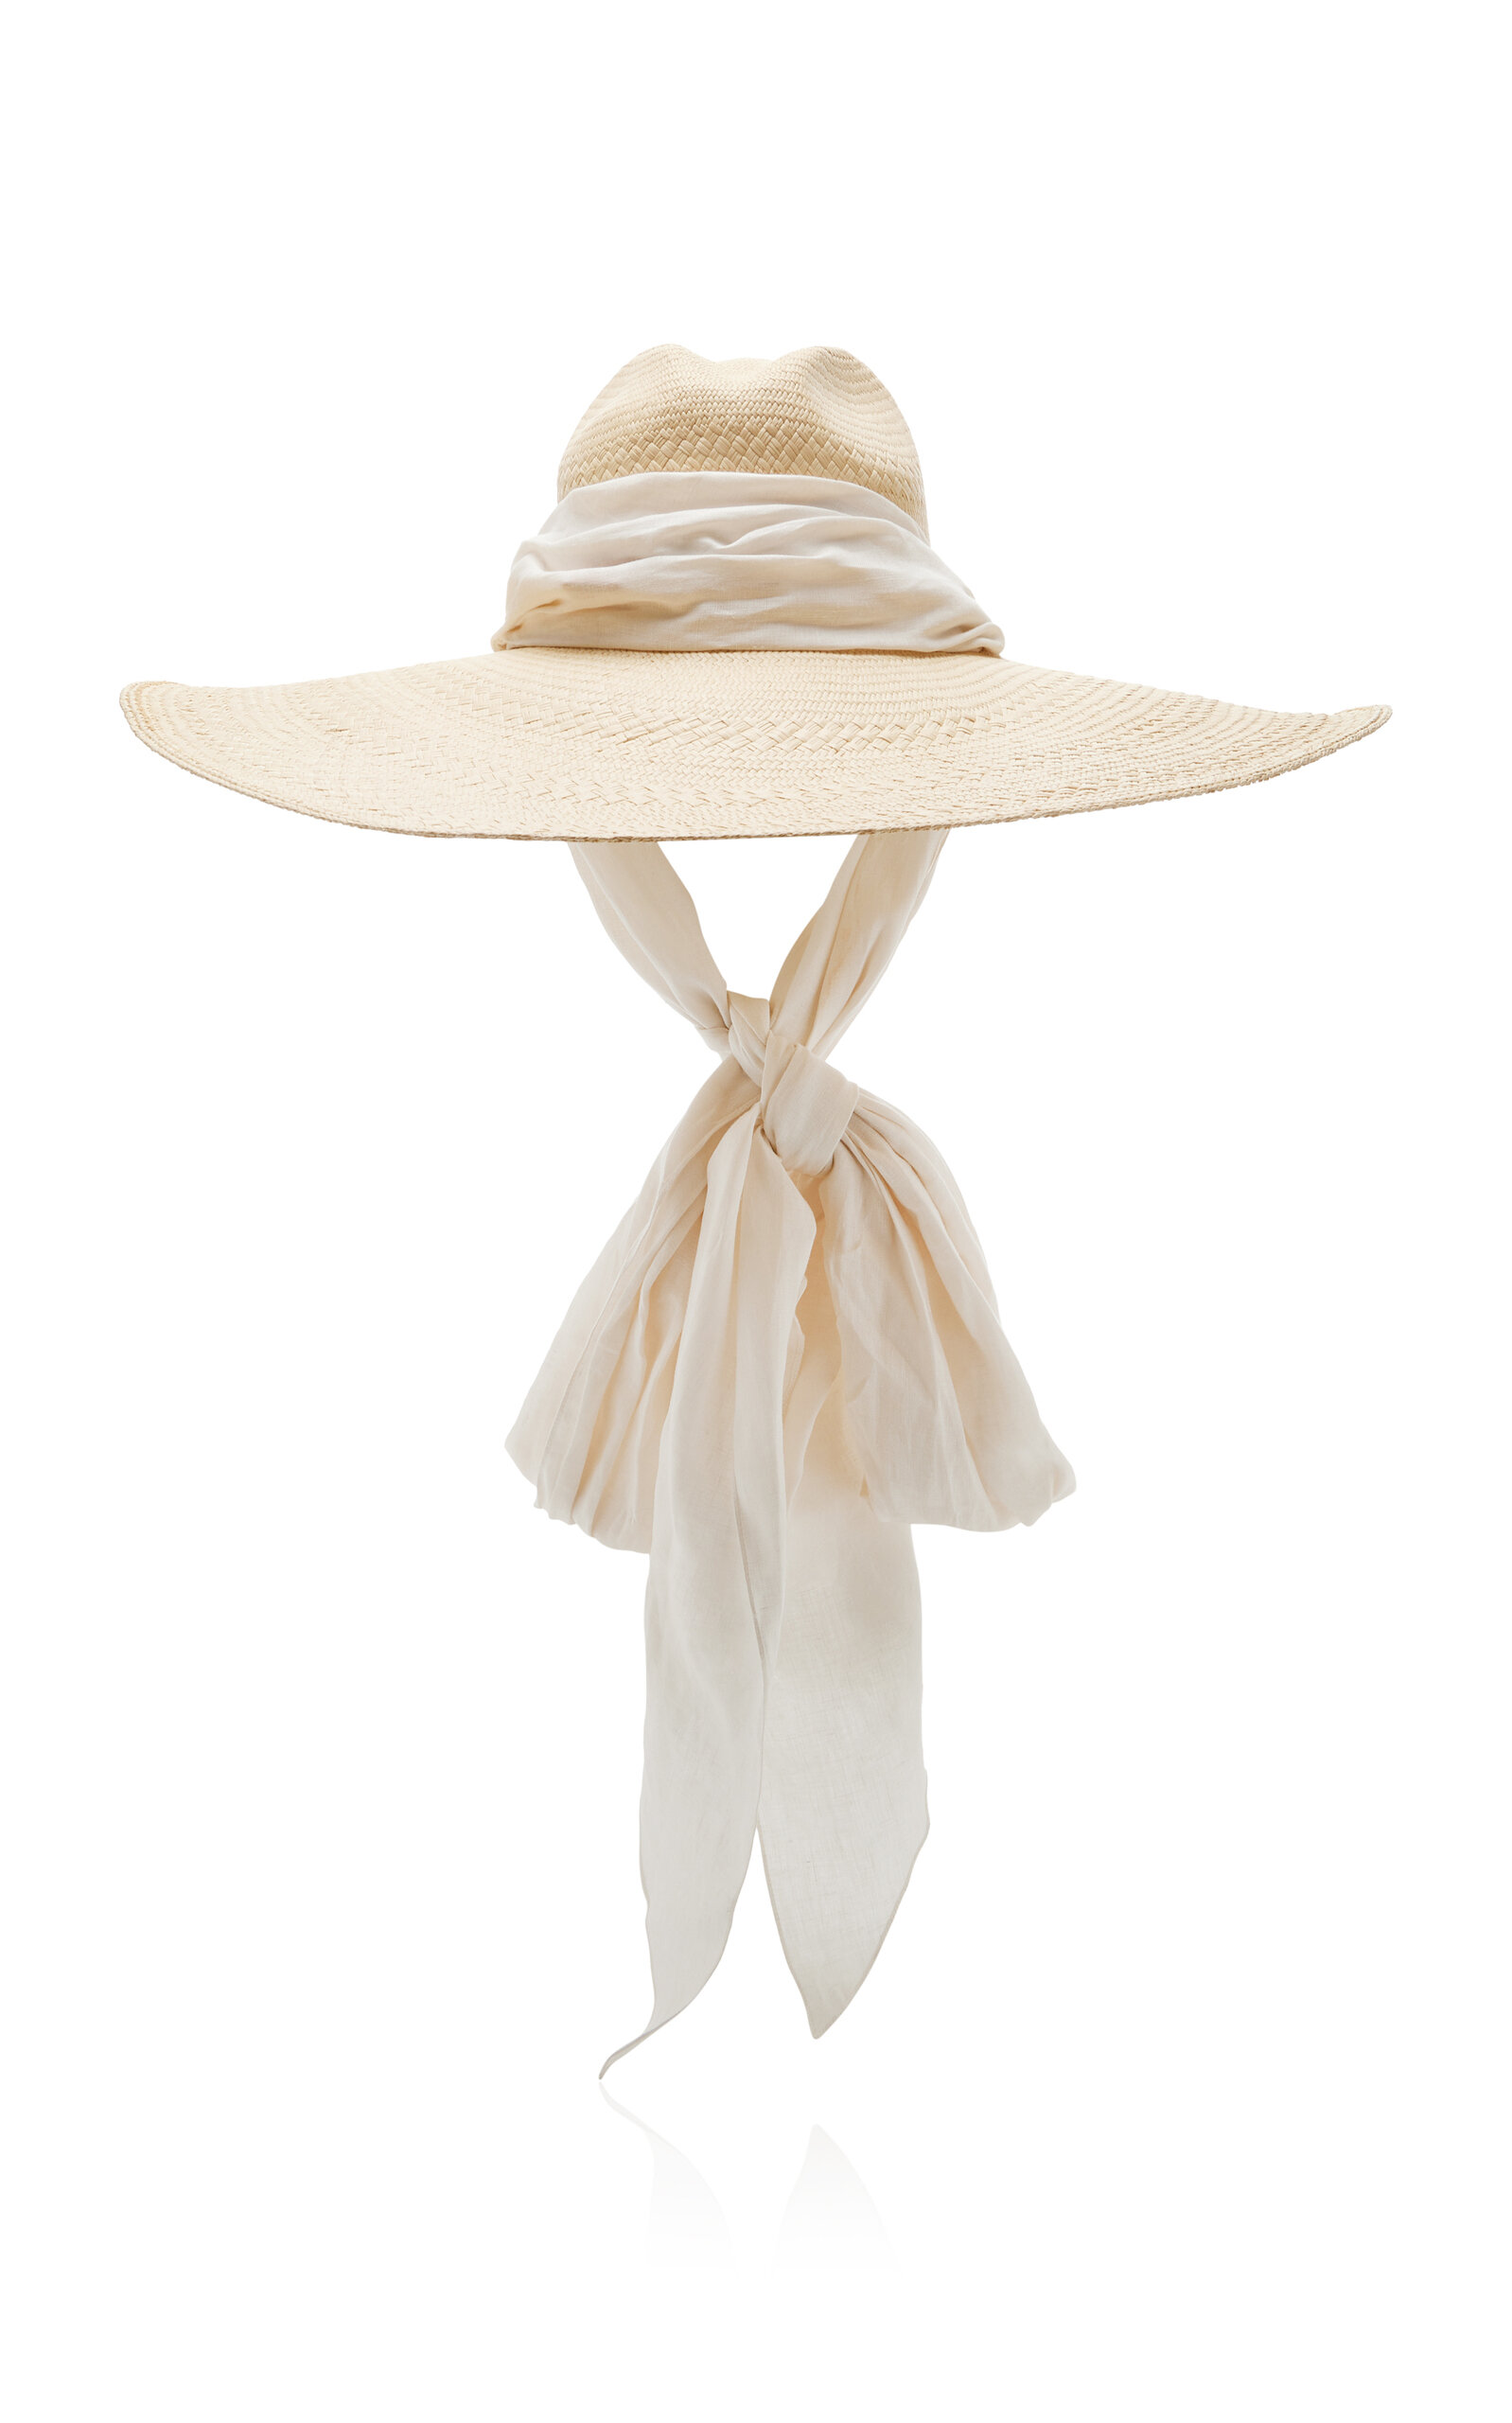 Johanna Ortiz Scarf-detailed Woven Palm Hat In Beige